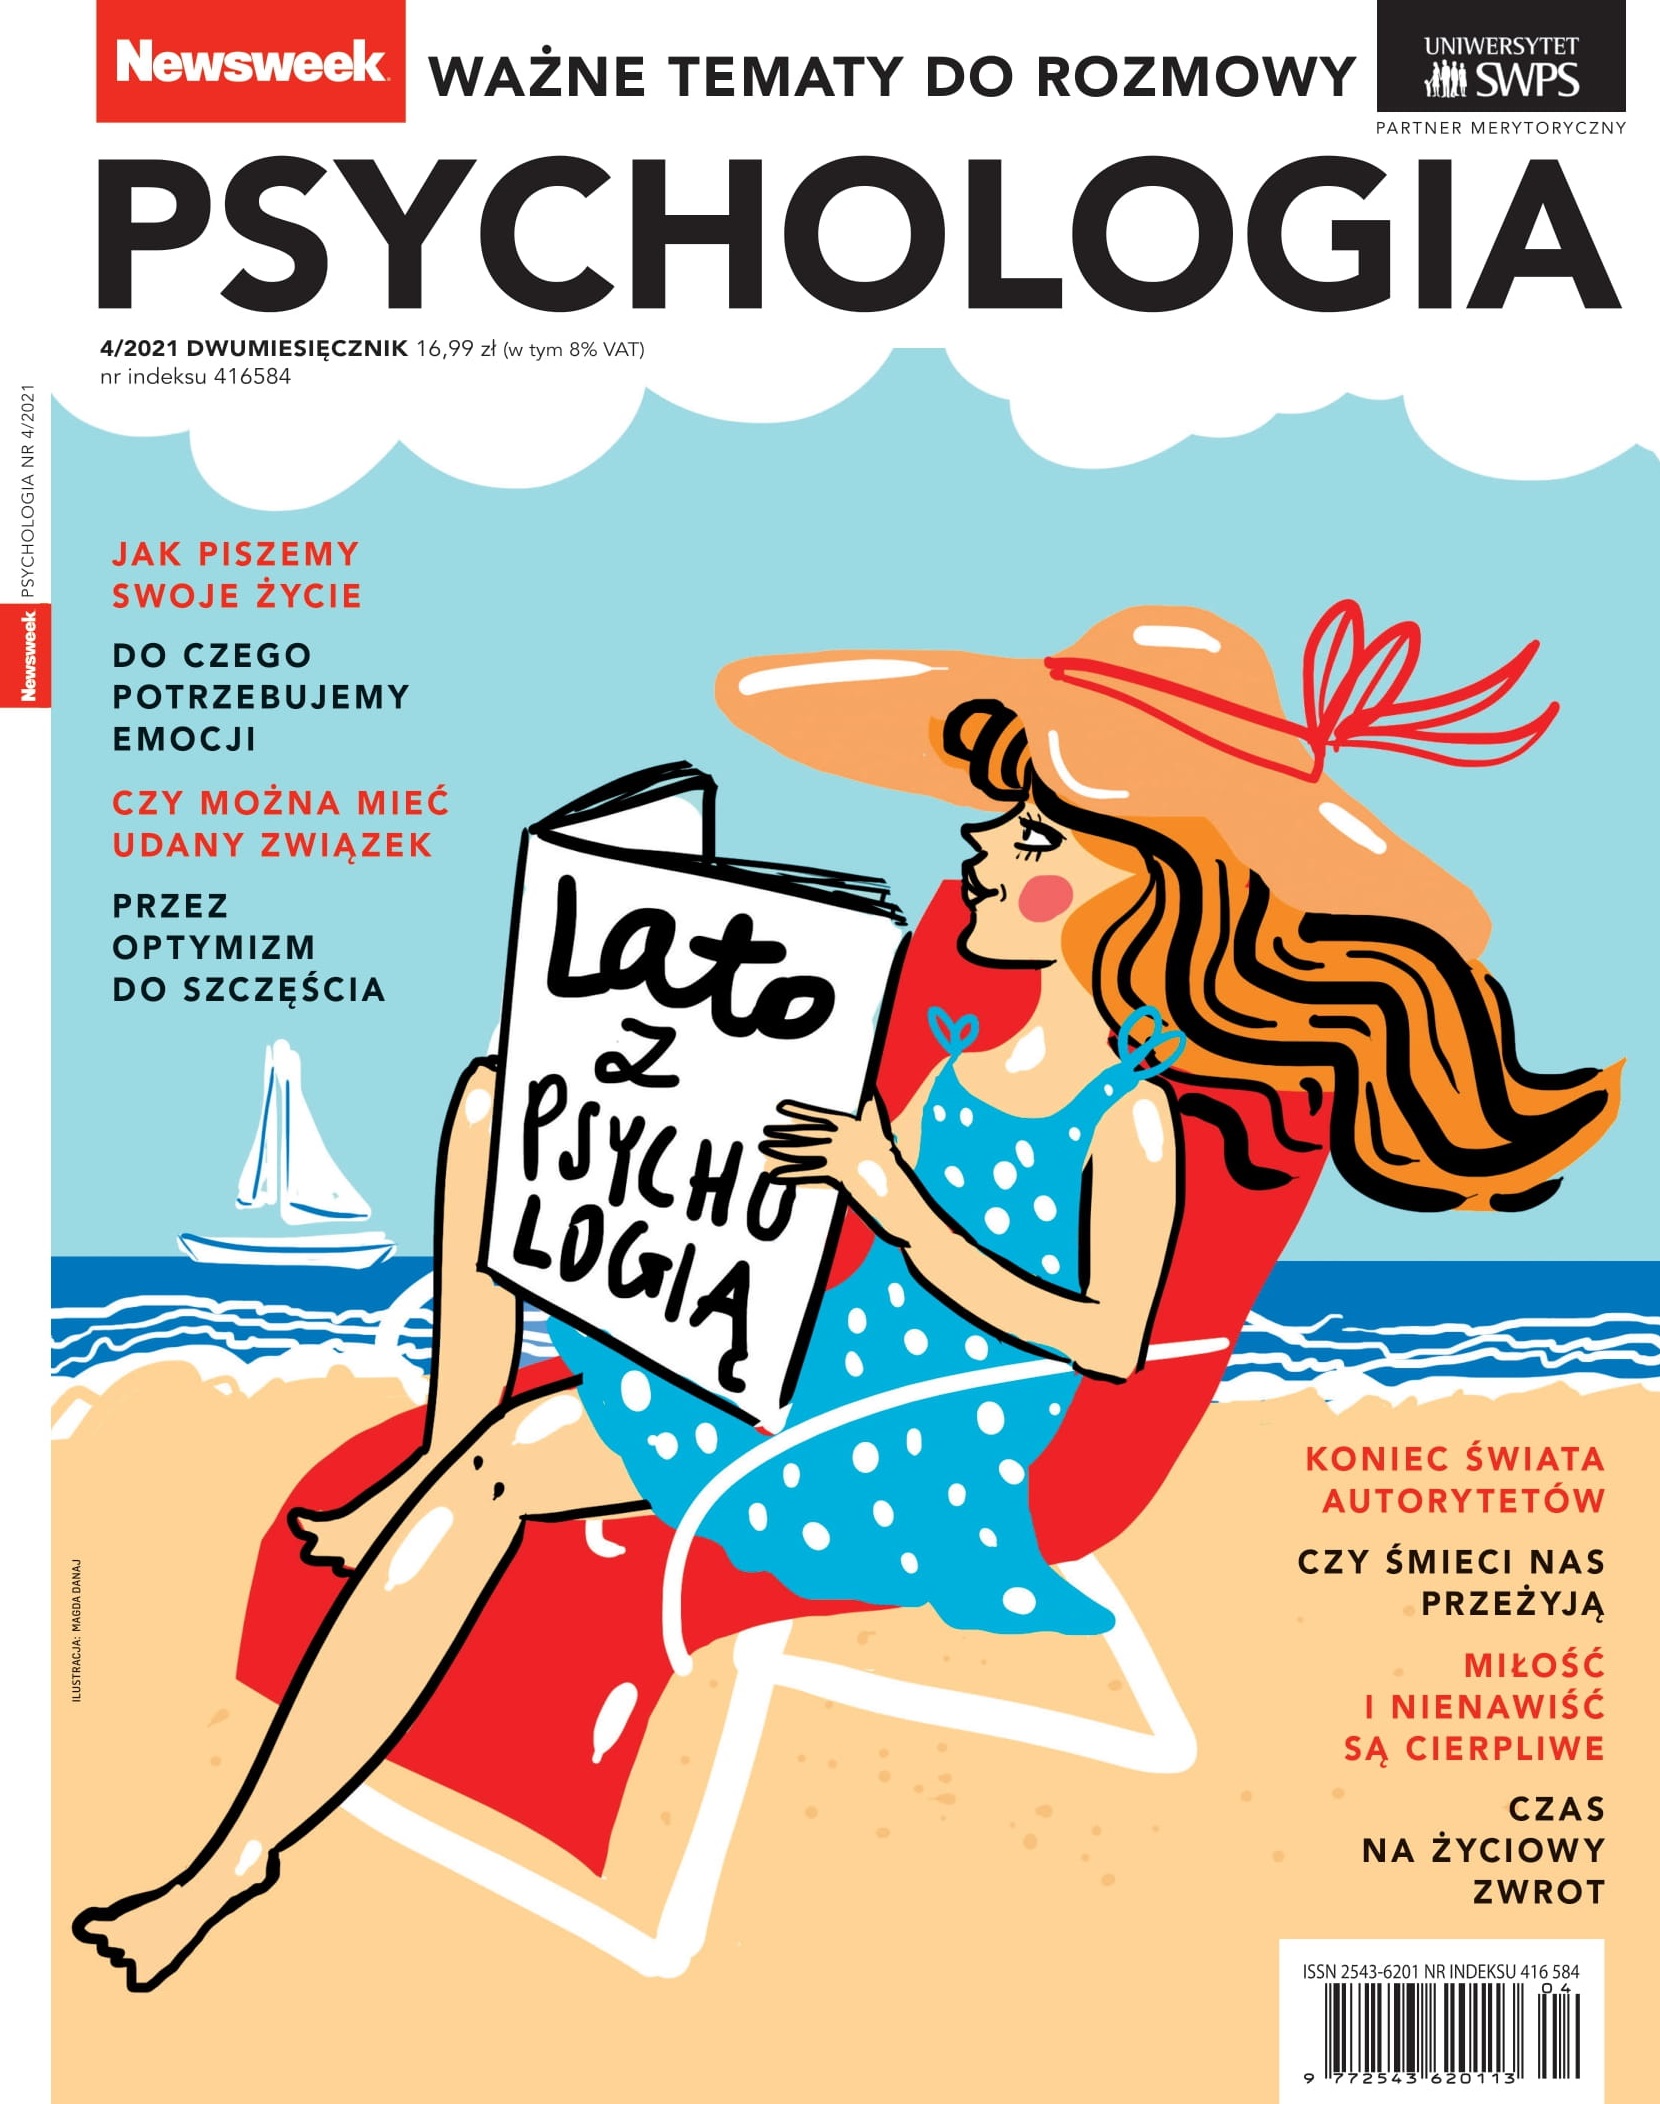 Newsweek Psychologia 4/2021